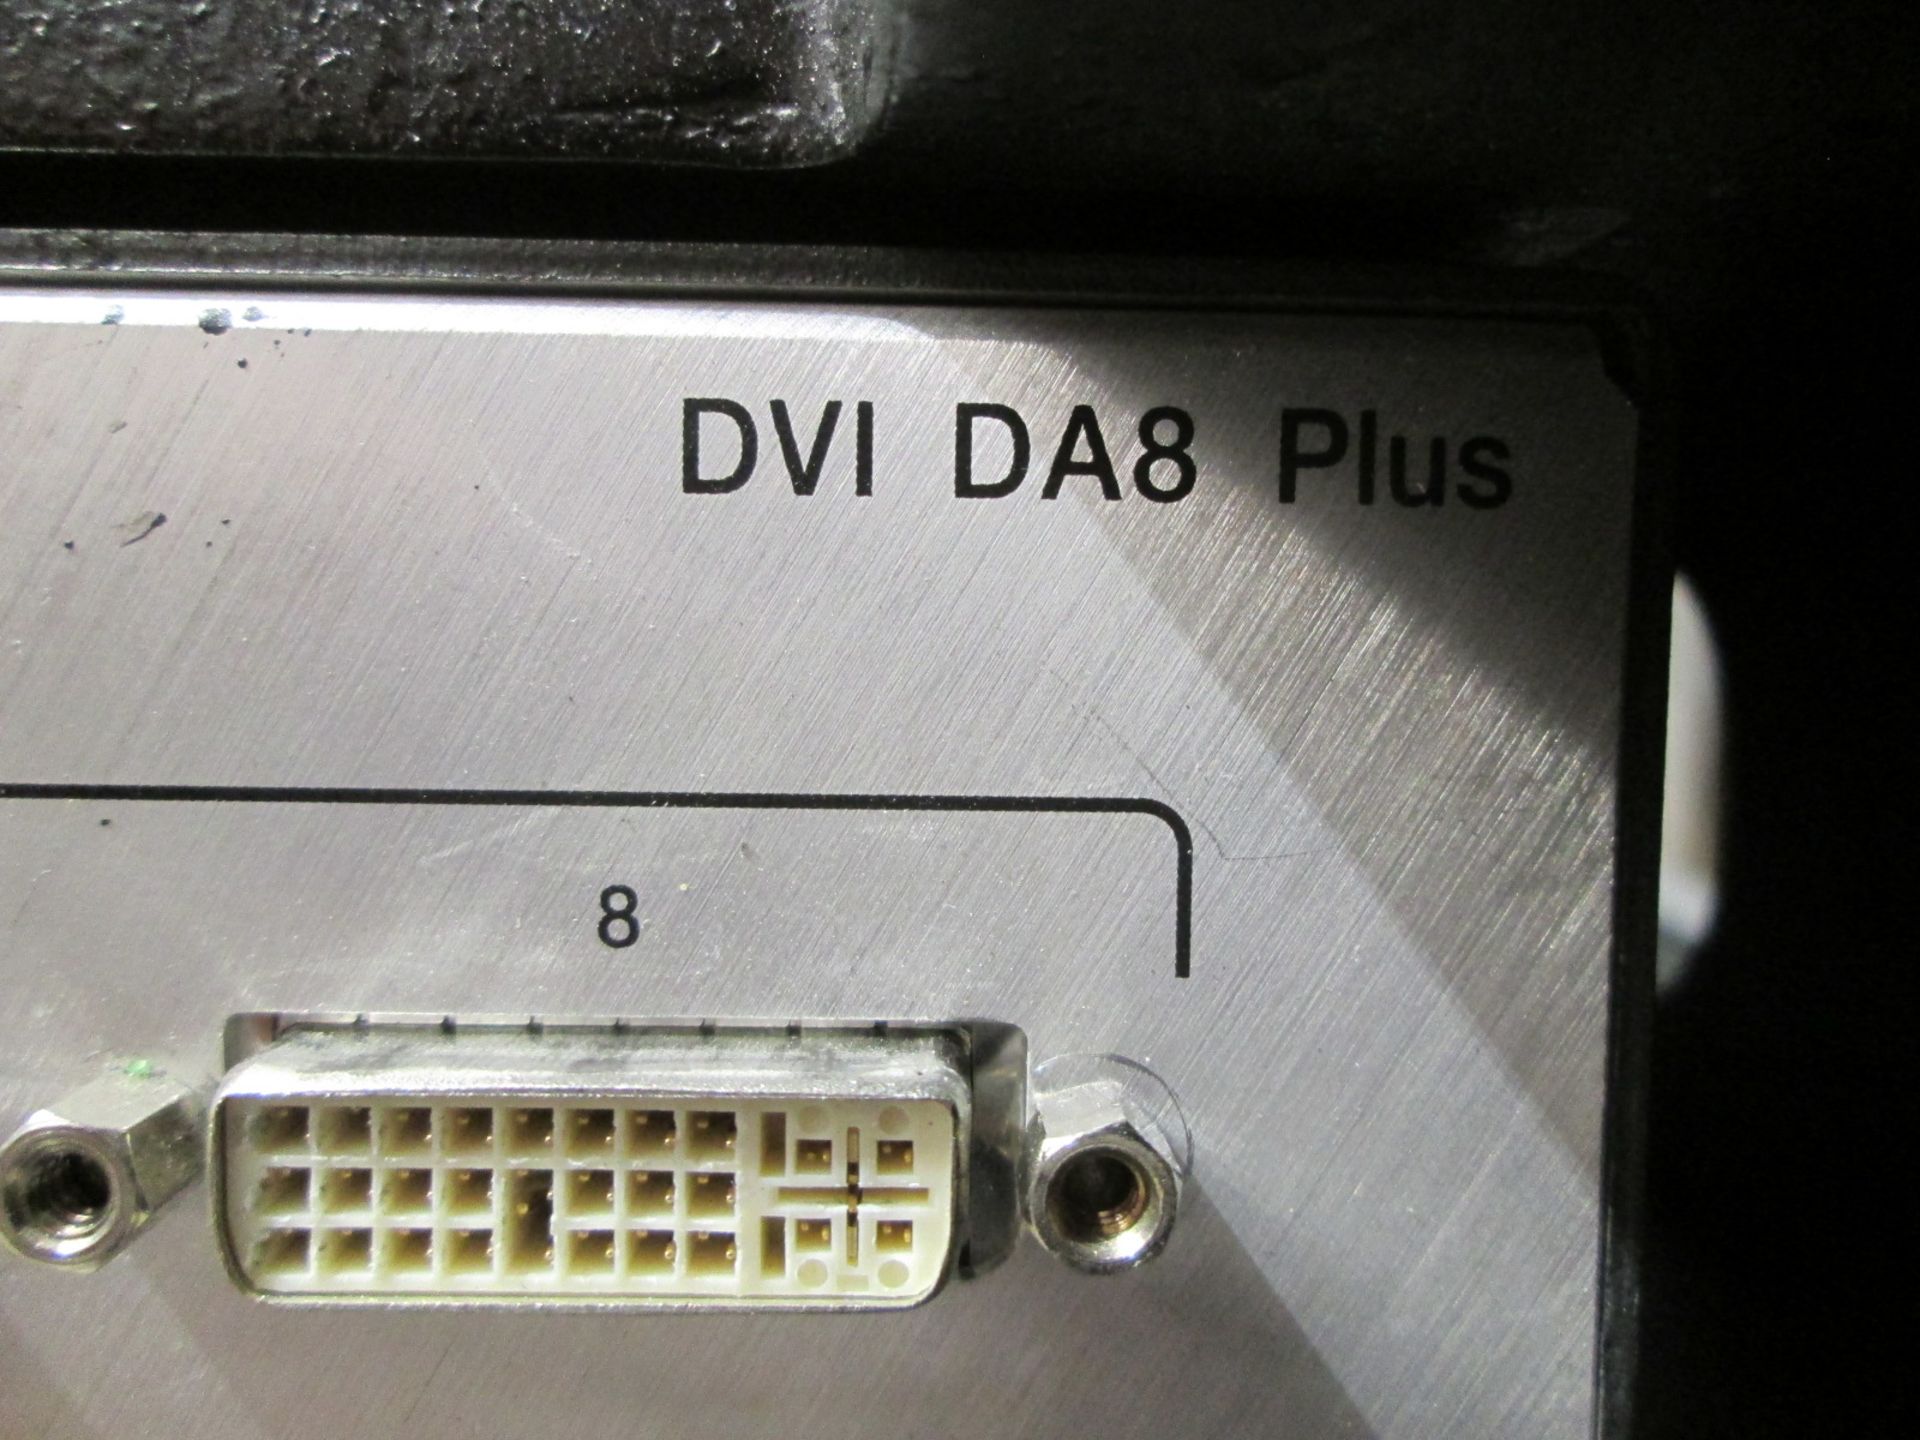 Extron DVI DA8 Plus 1:8 distribution Amplifers, In flight cases (Qty 4) - Image 5 of 5